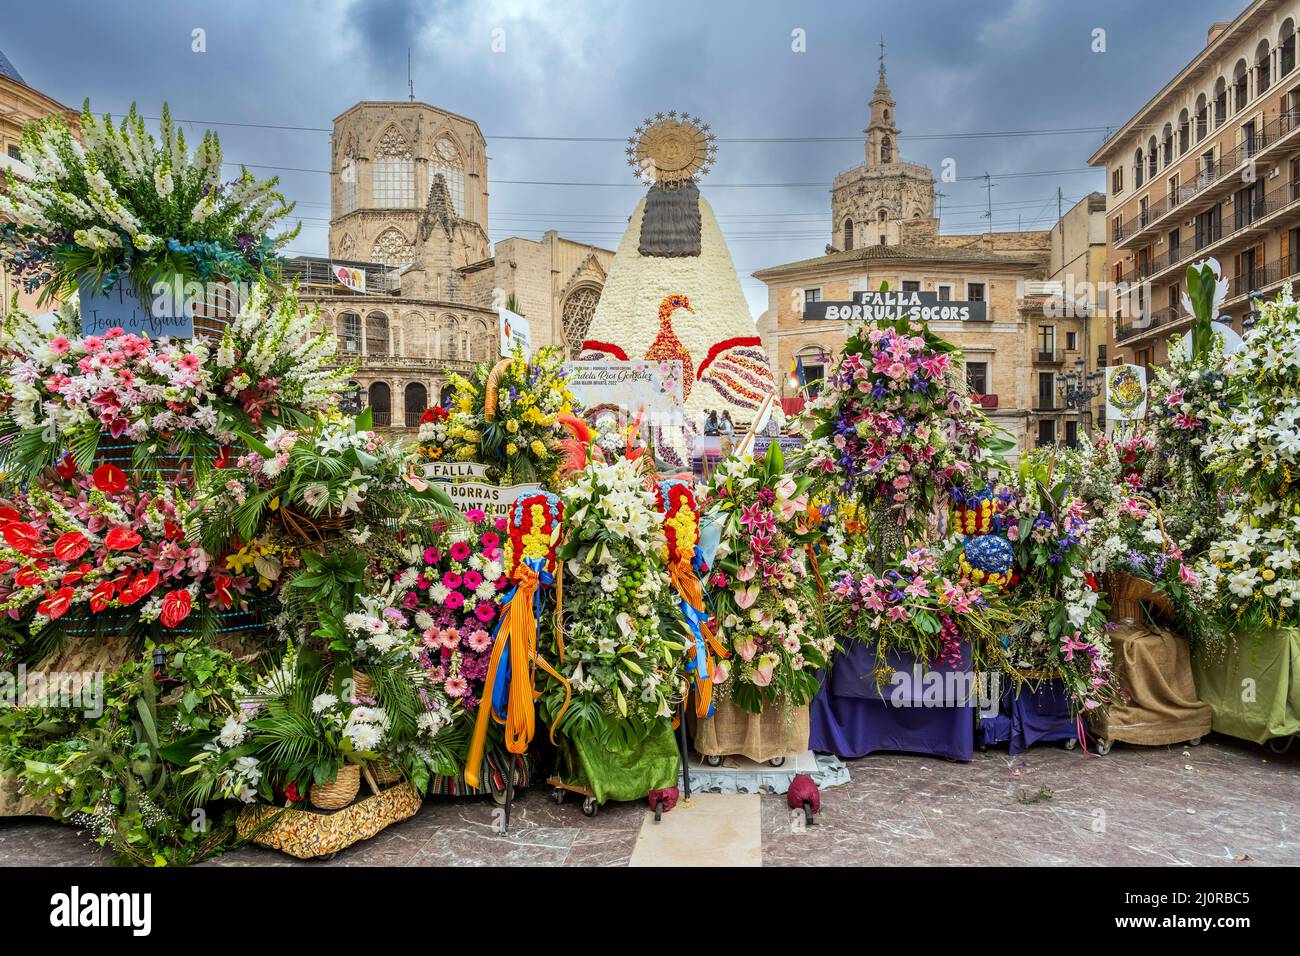 The flower offering ceremony (ofrena de flors or ofrenda de flores) during the annual Fallas Festival, Valencia, Spain Stock Photo